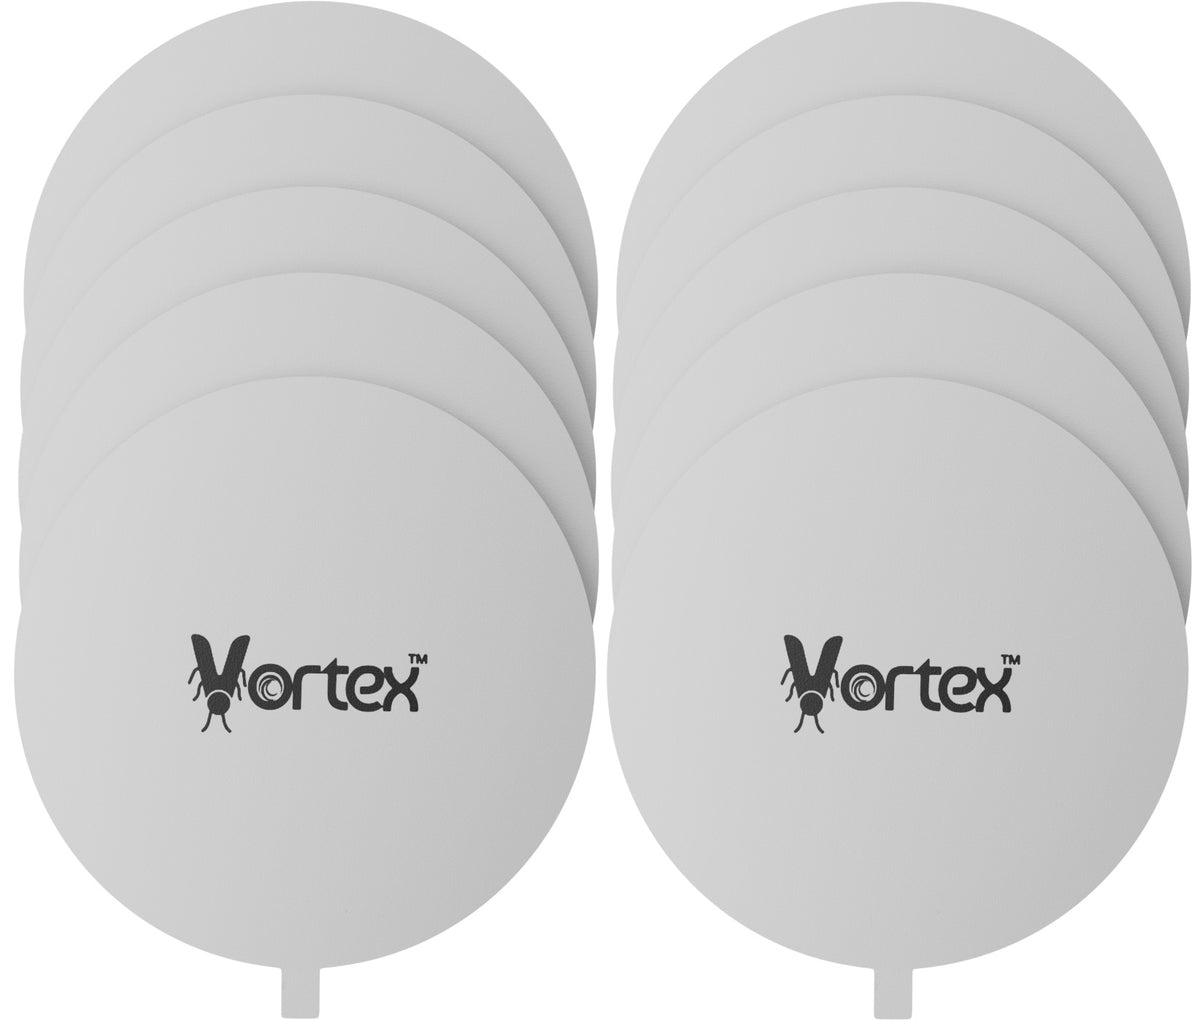  Vortex Indoor Insect Trap - Catcher & Killer for